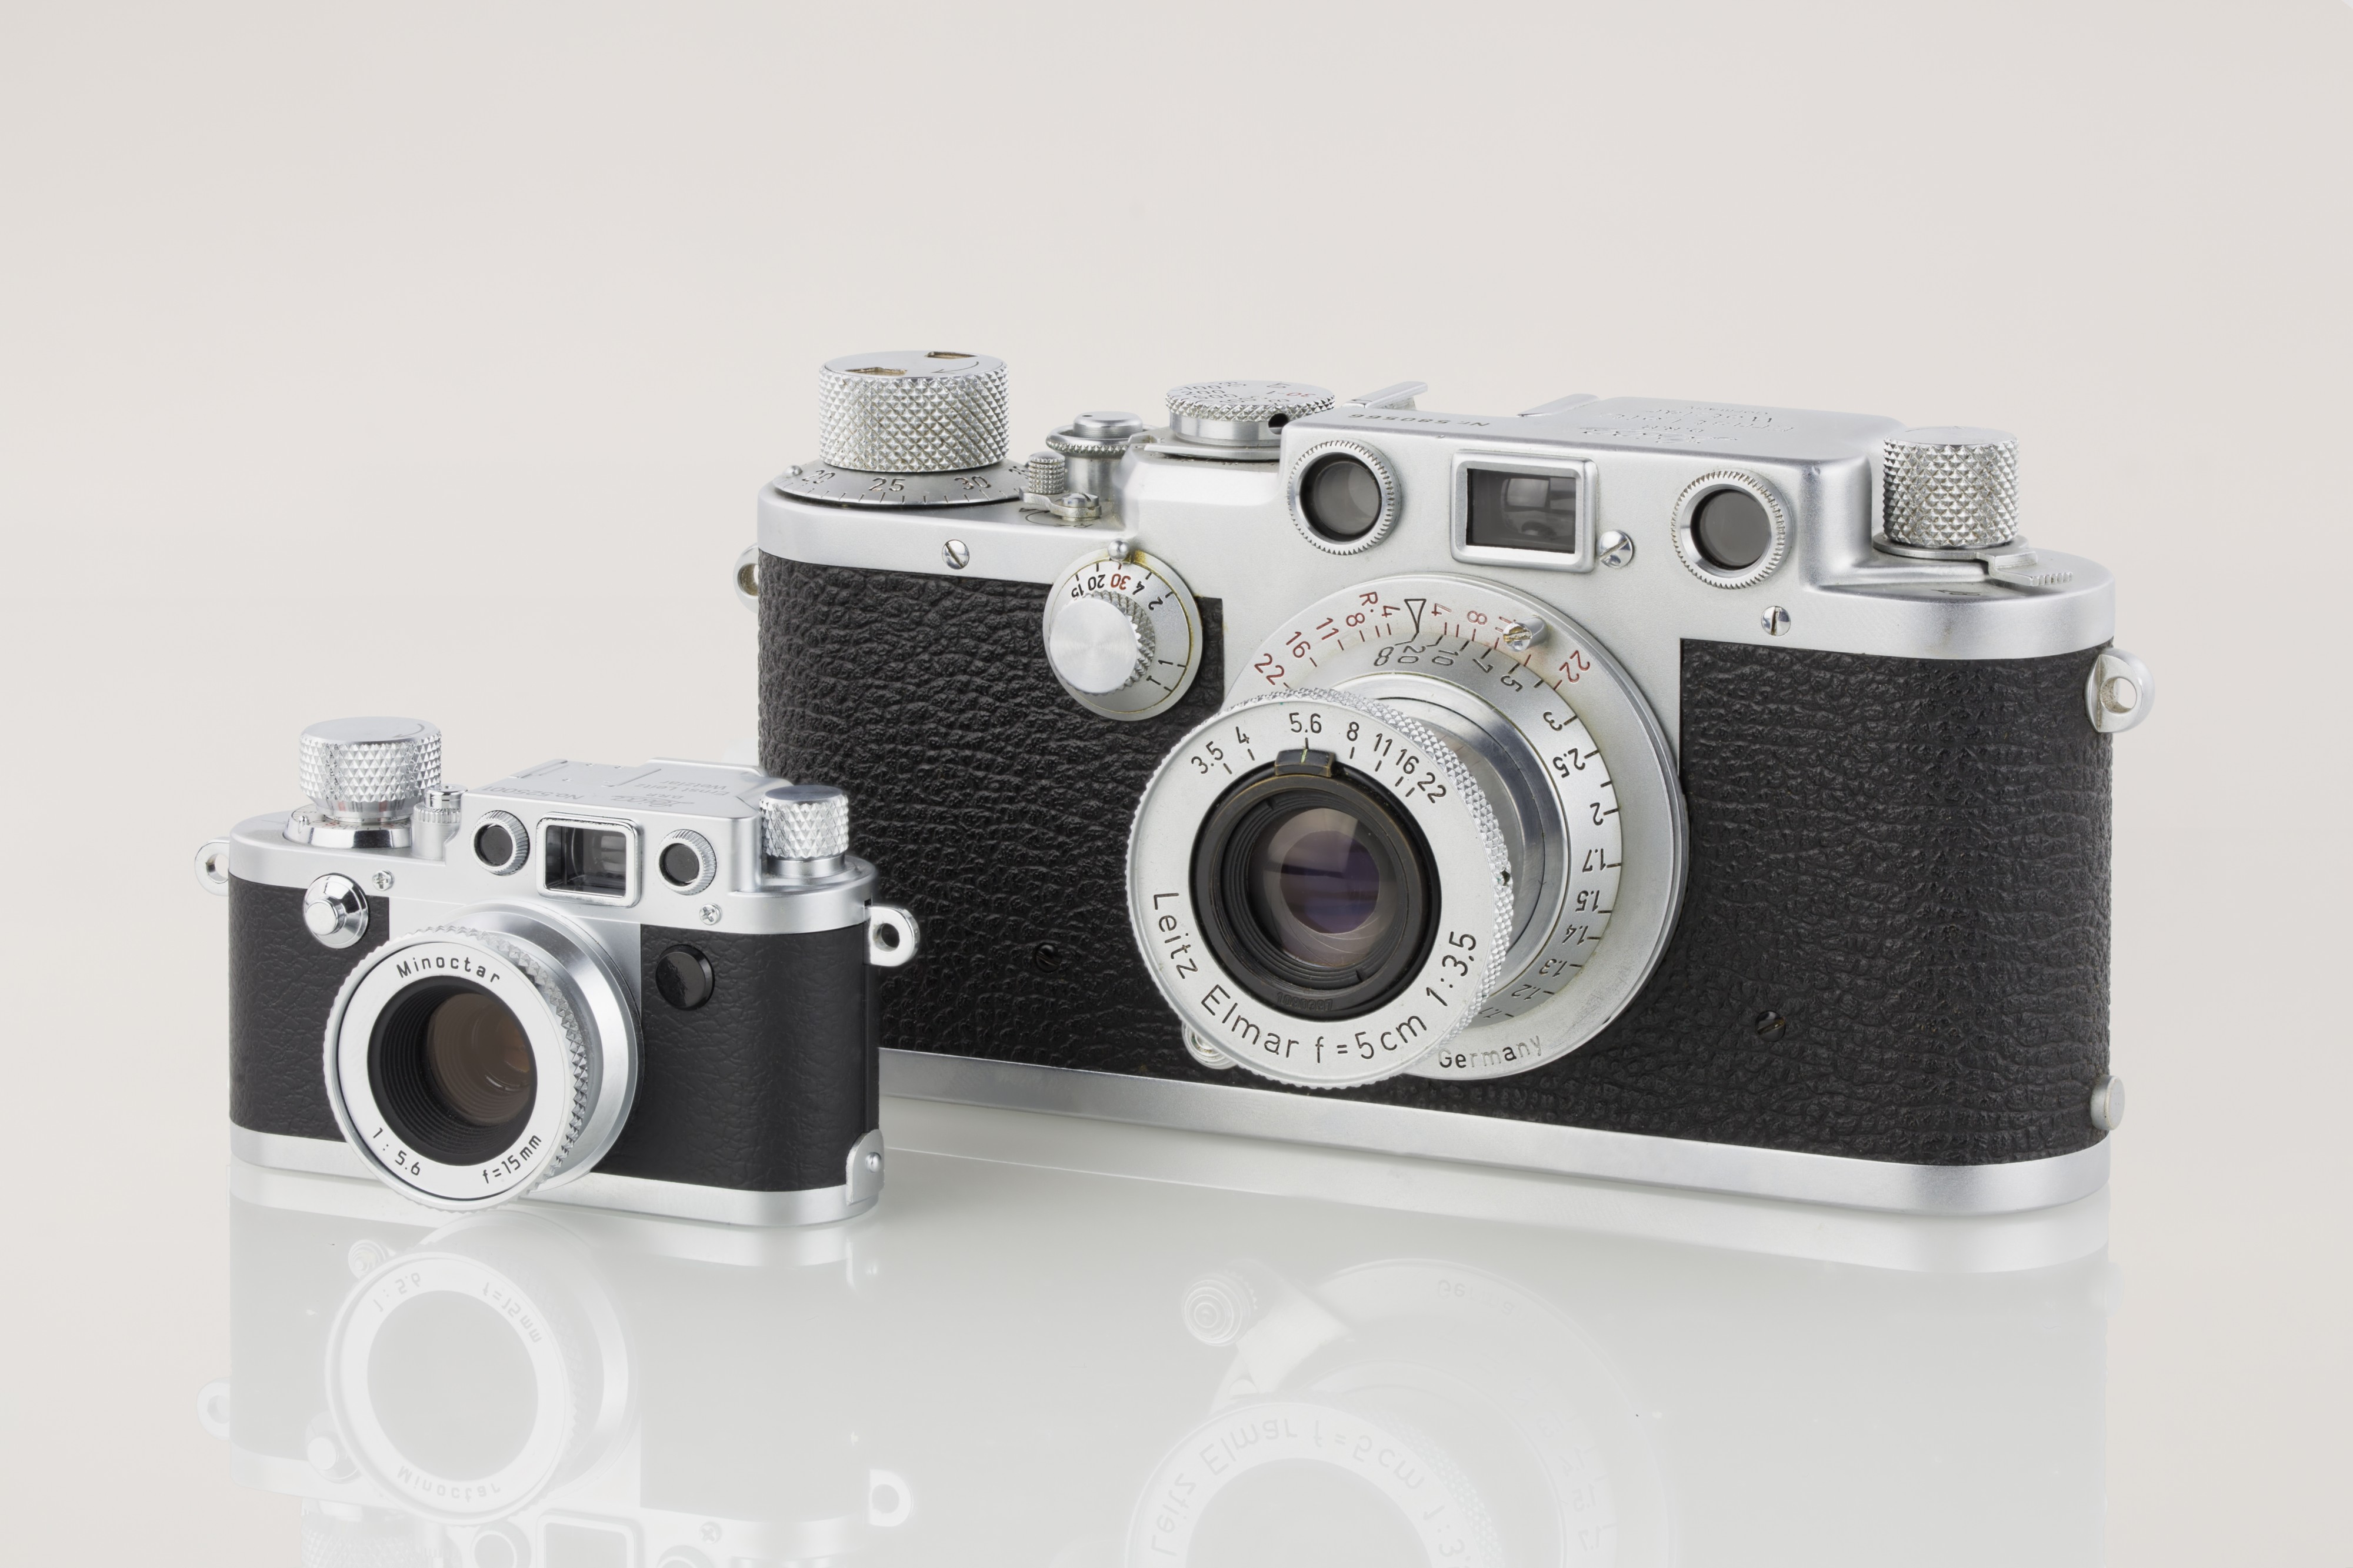 LEI0440 190 Leica IIIf chrom - Sn. 580566 1951-52-M39 vs. Minox Leica IIIf Ohne Blitz Version 2-6124 hf